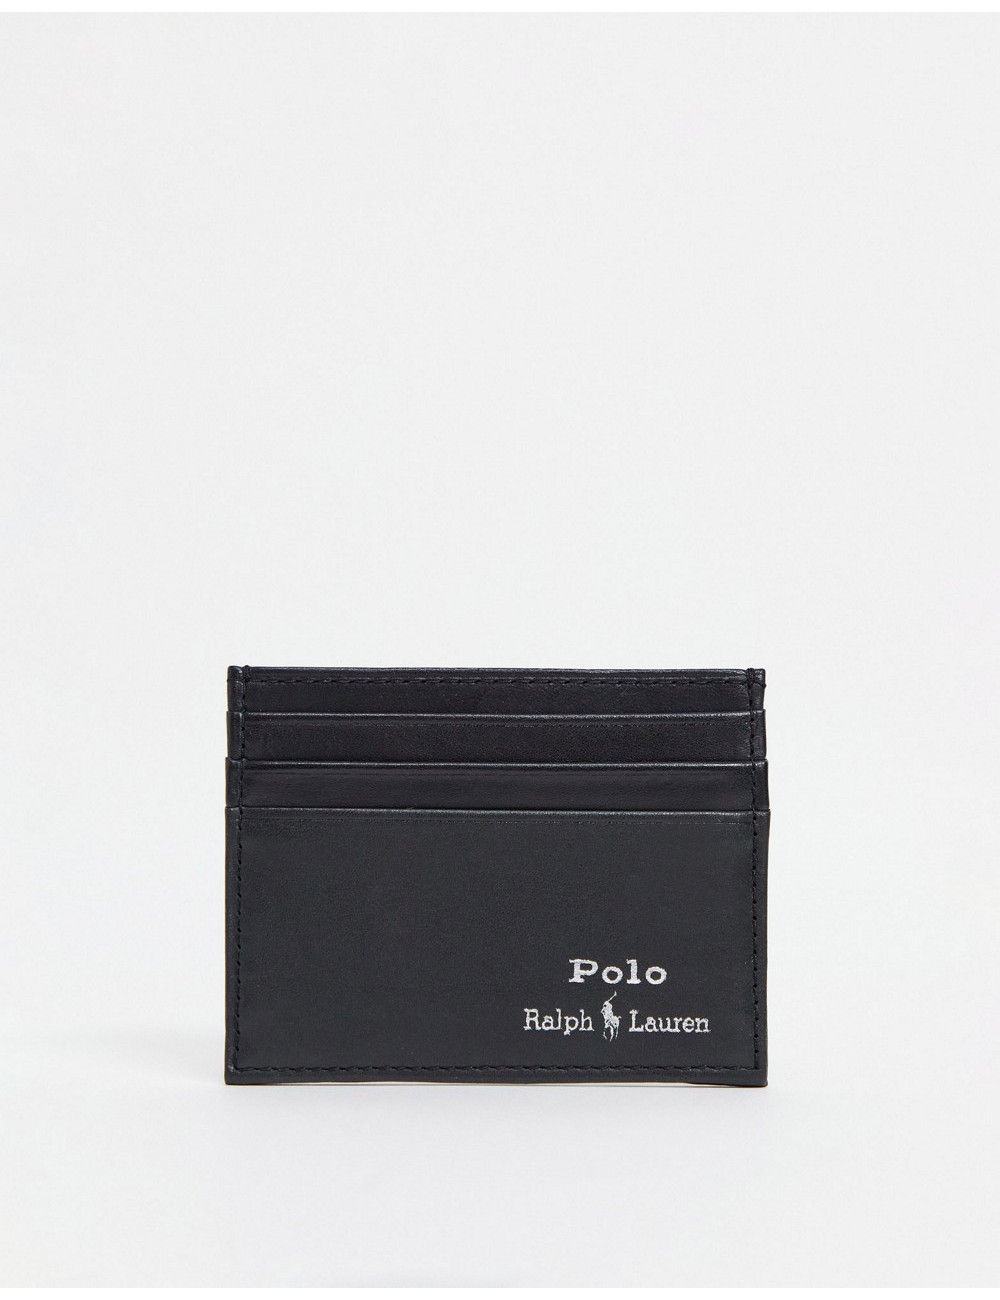 Polo Ralph Lauren leather...